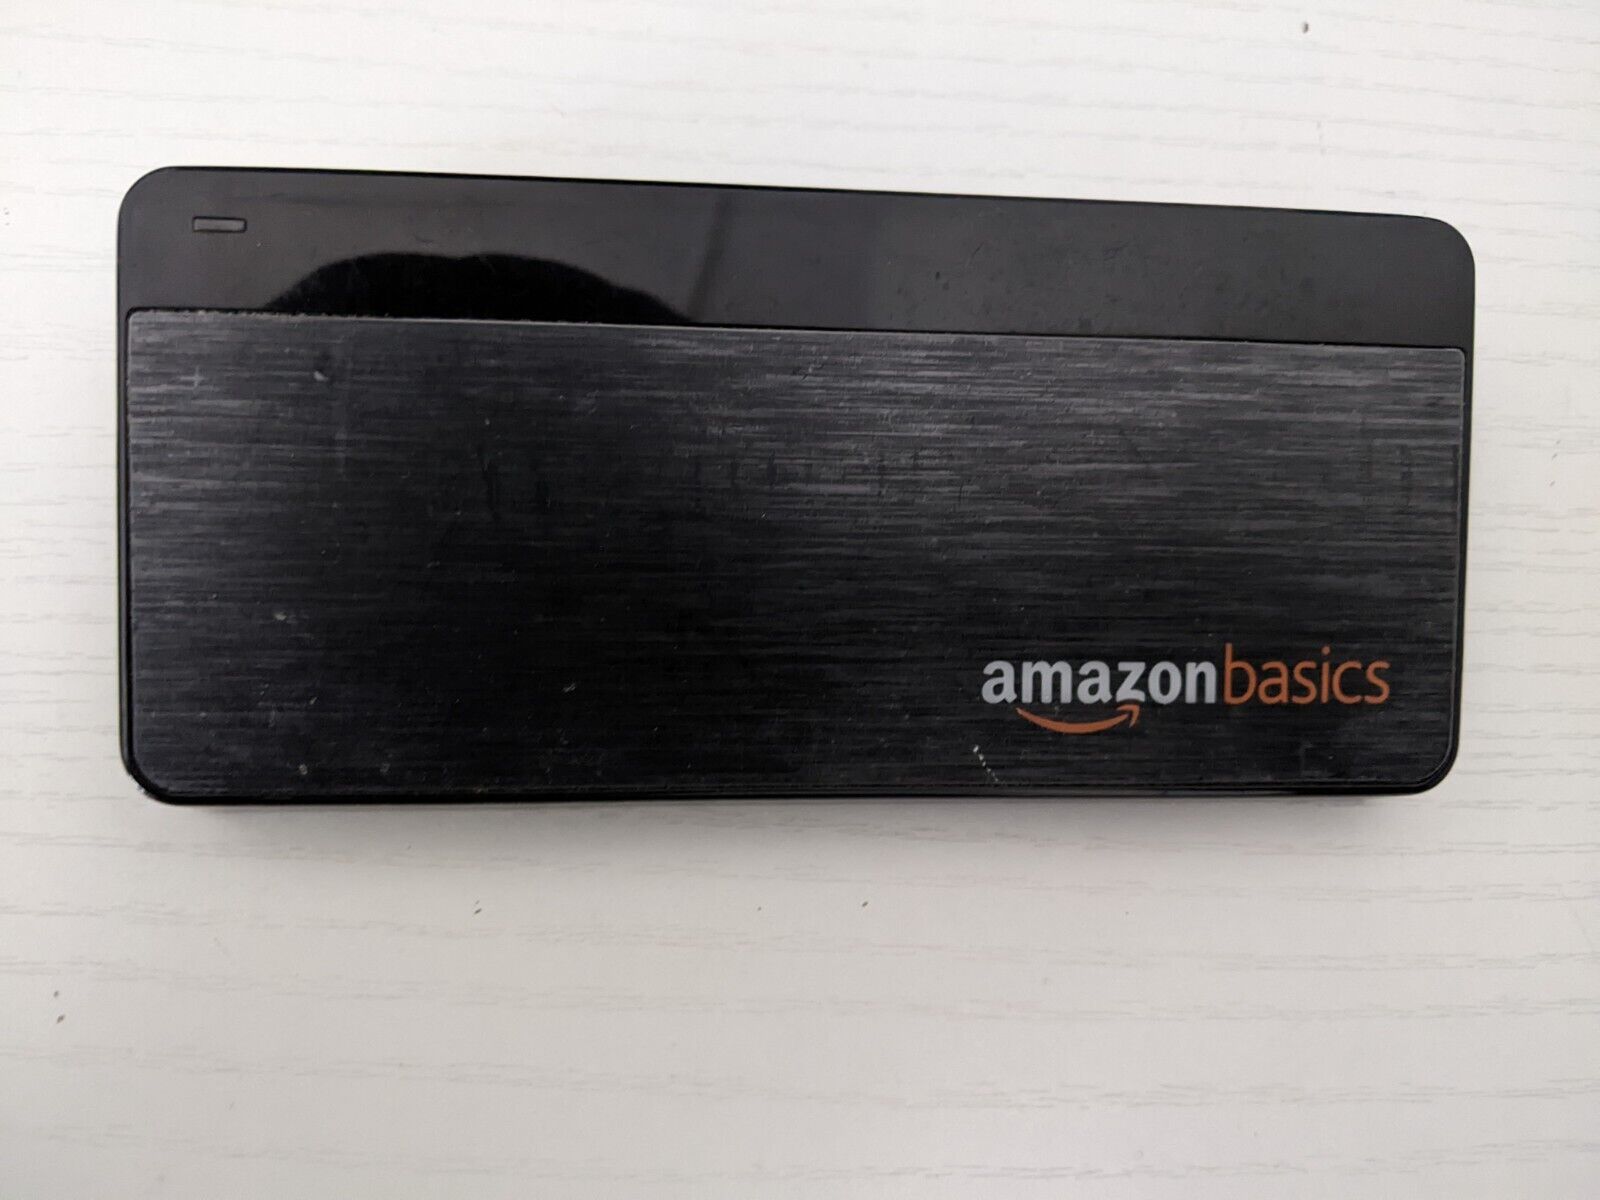 Amazon Basics 7 Port USB 3.0 Hub with 12V/3A Power Adapter